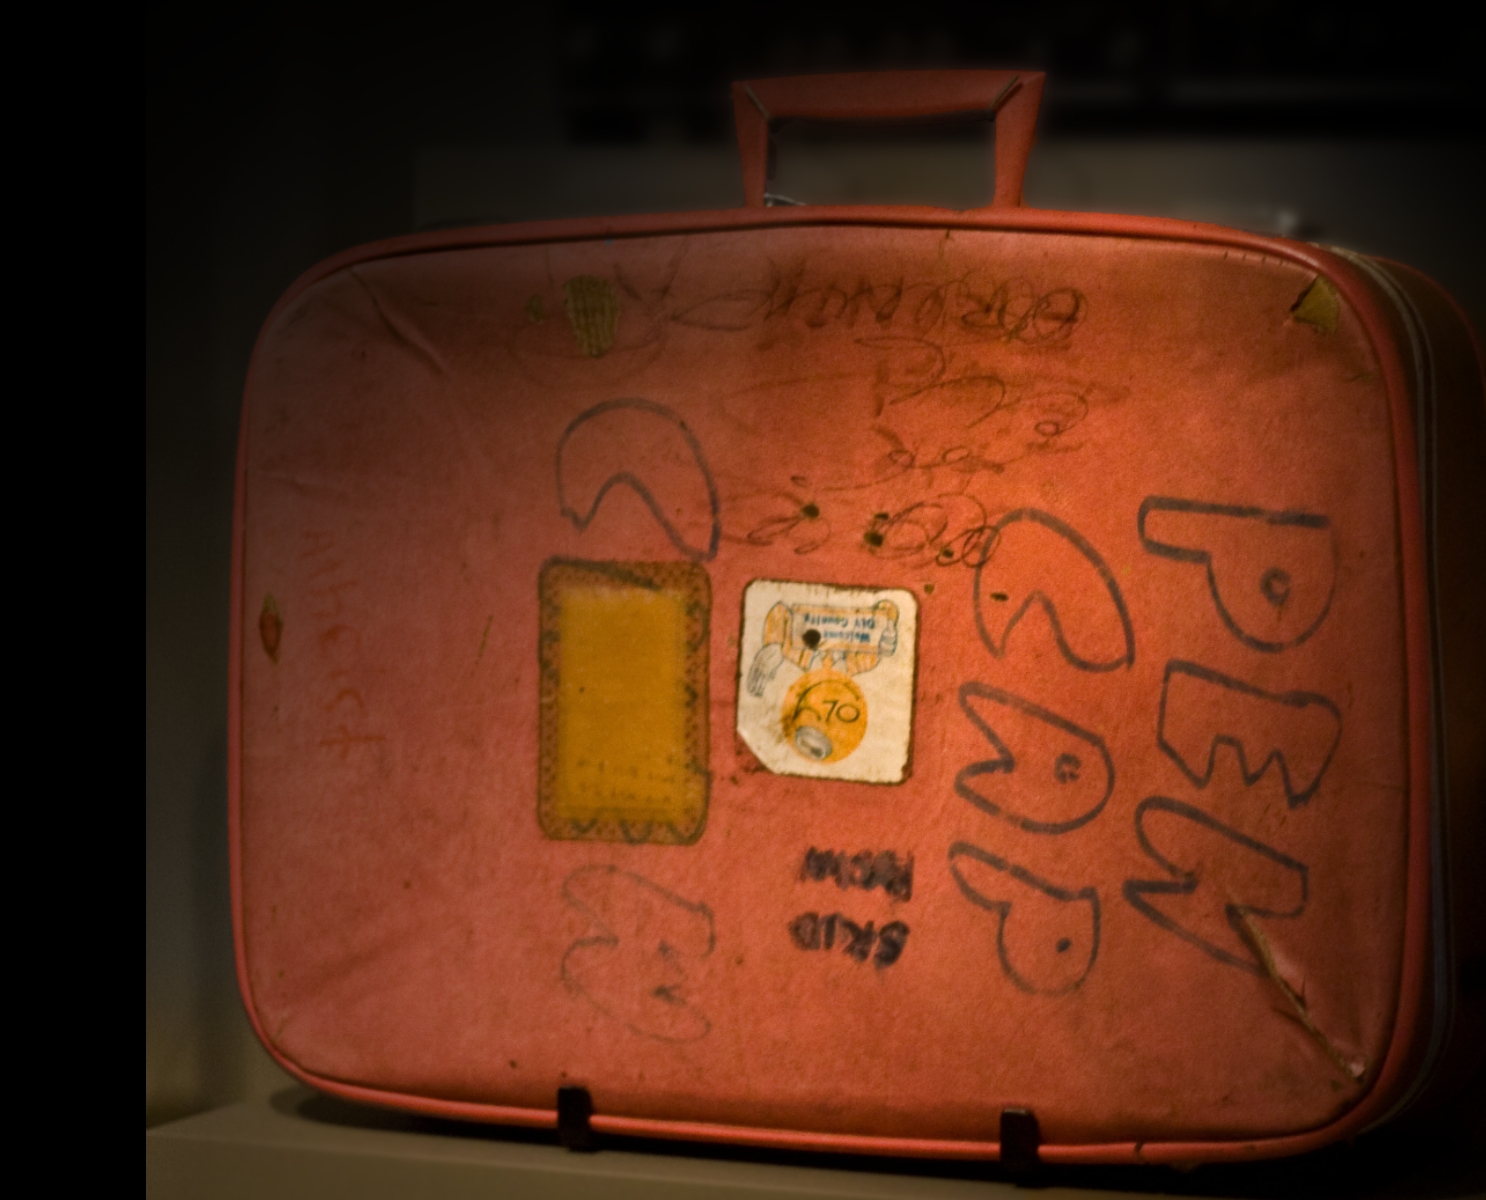 Kelly, 2012, Kurt Cobain’s suitcase, EMP museum